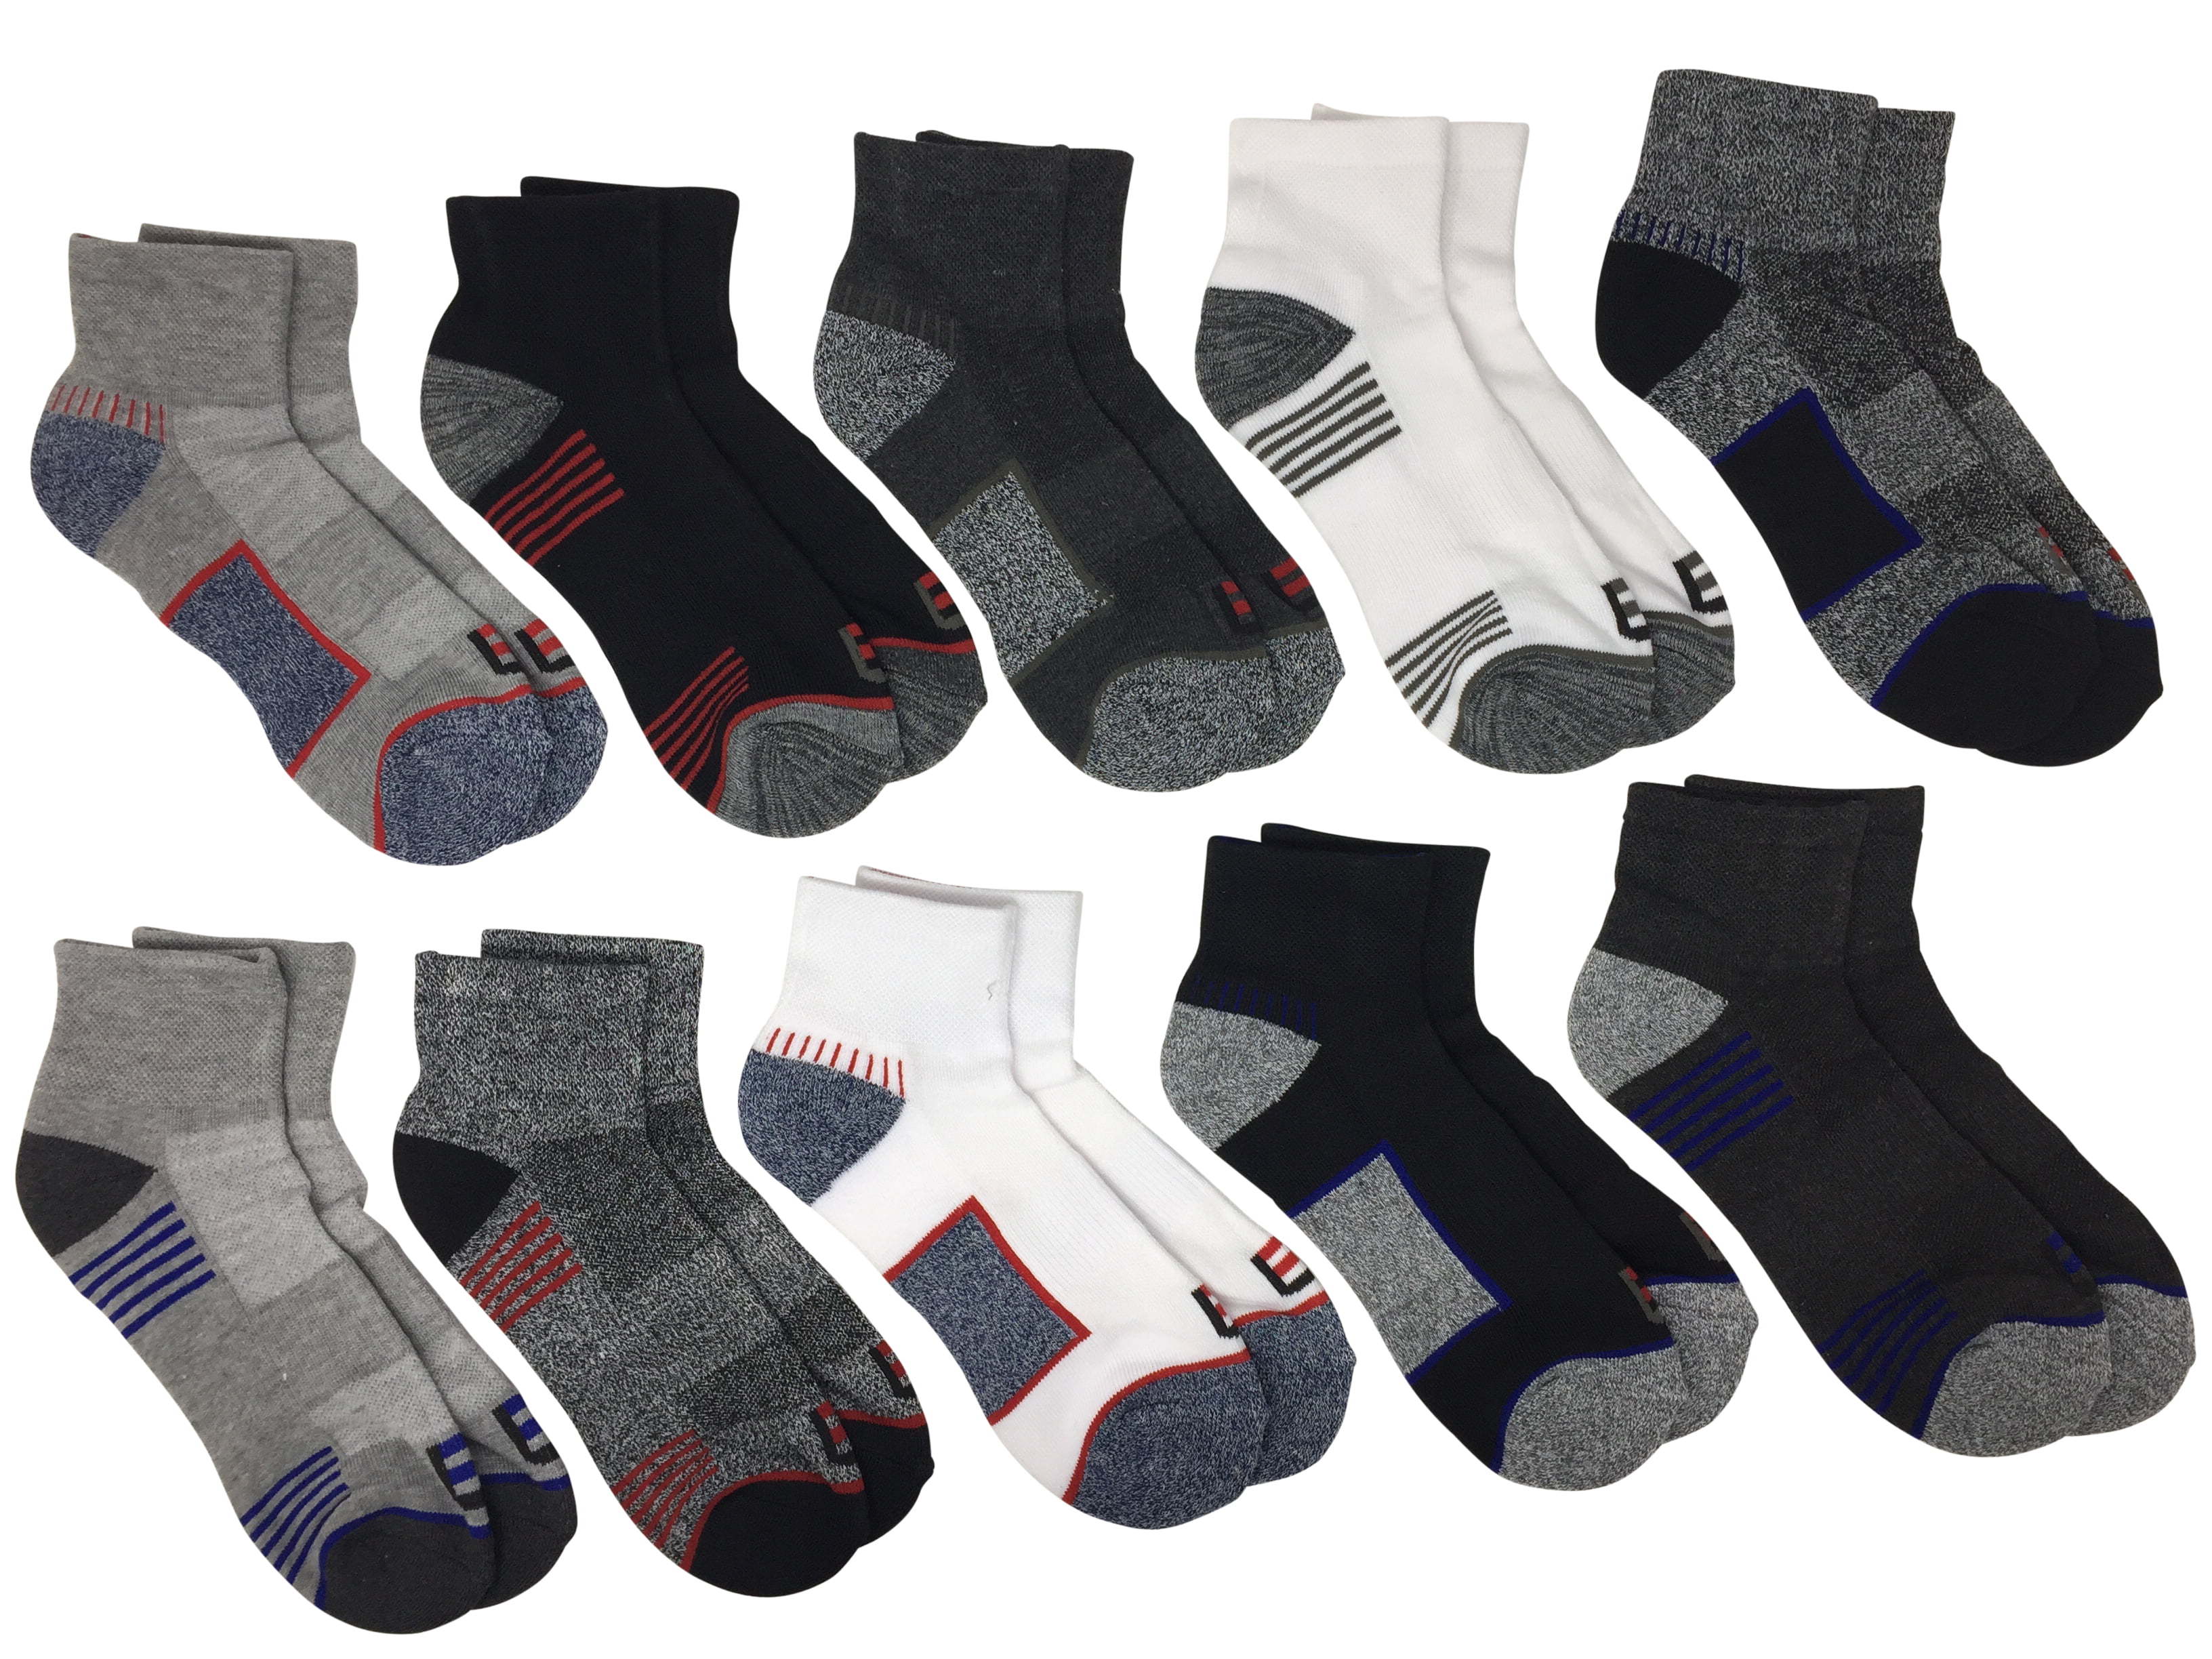 Locker Room - Locker Room Athletic Socks, Black/Grey/White, One Size ...